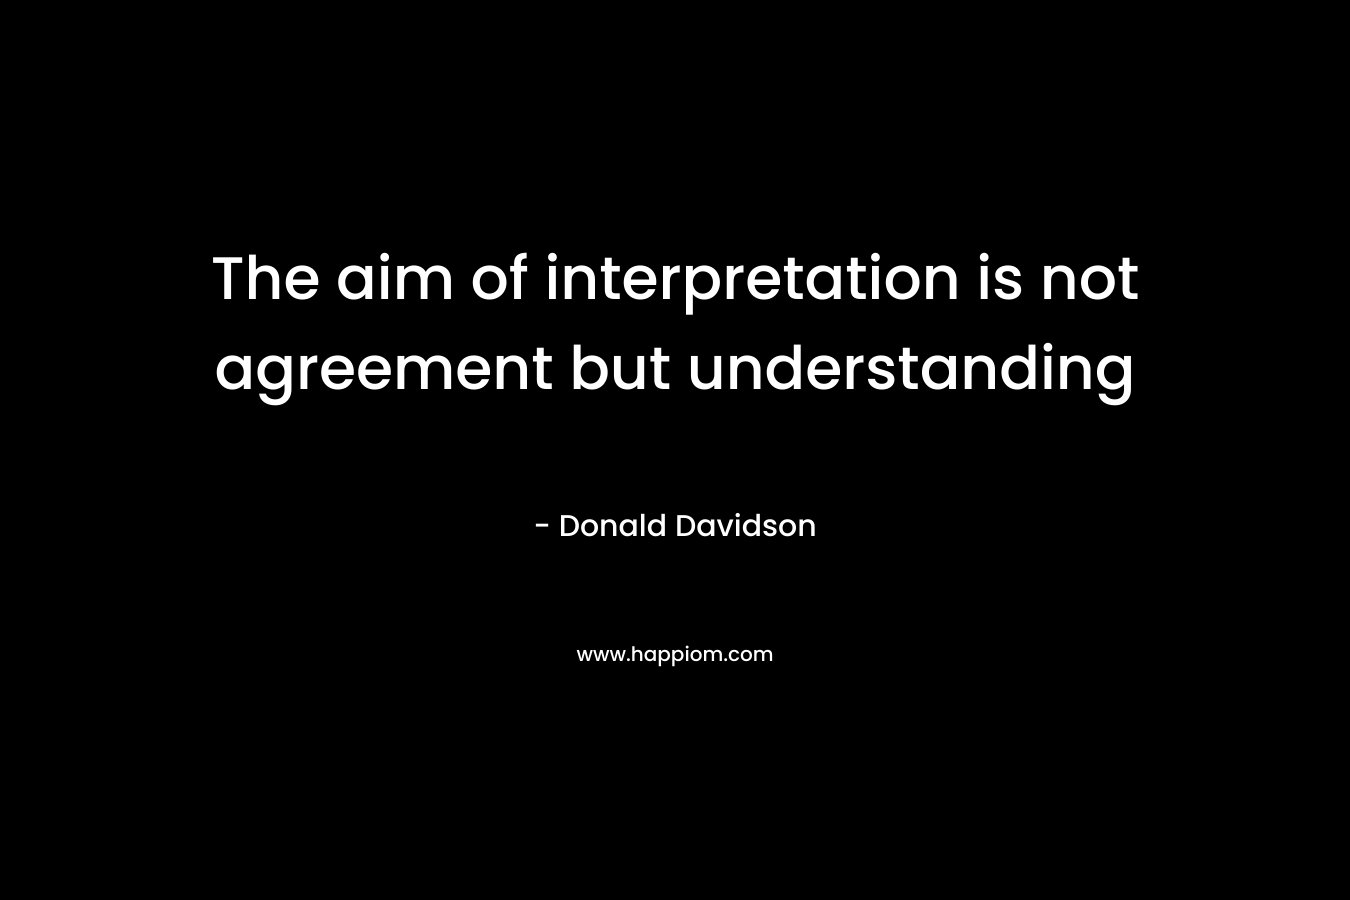 The aim of interpretation is not agreement but understanding